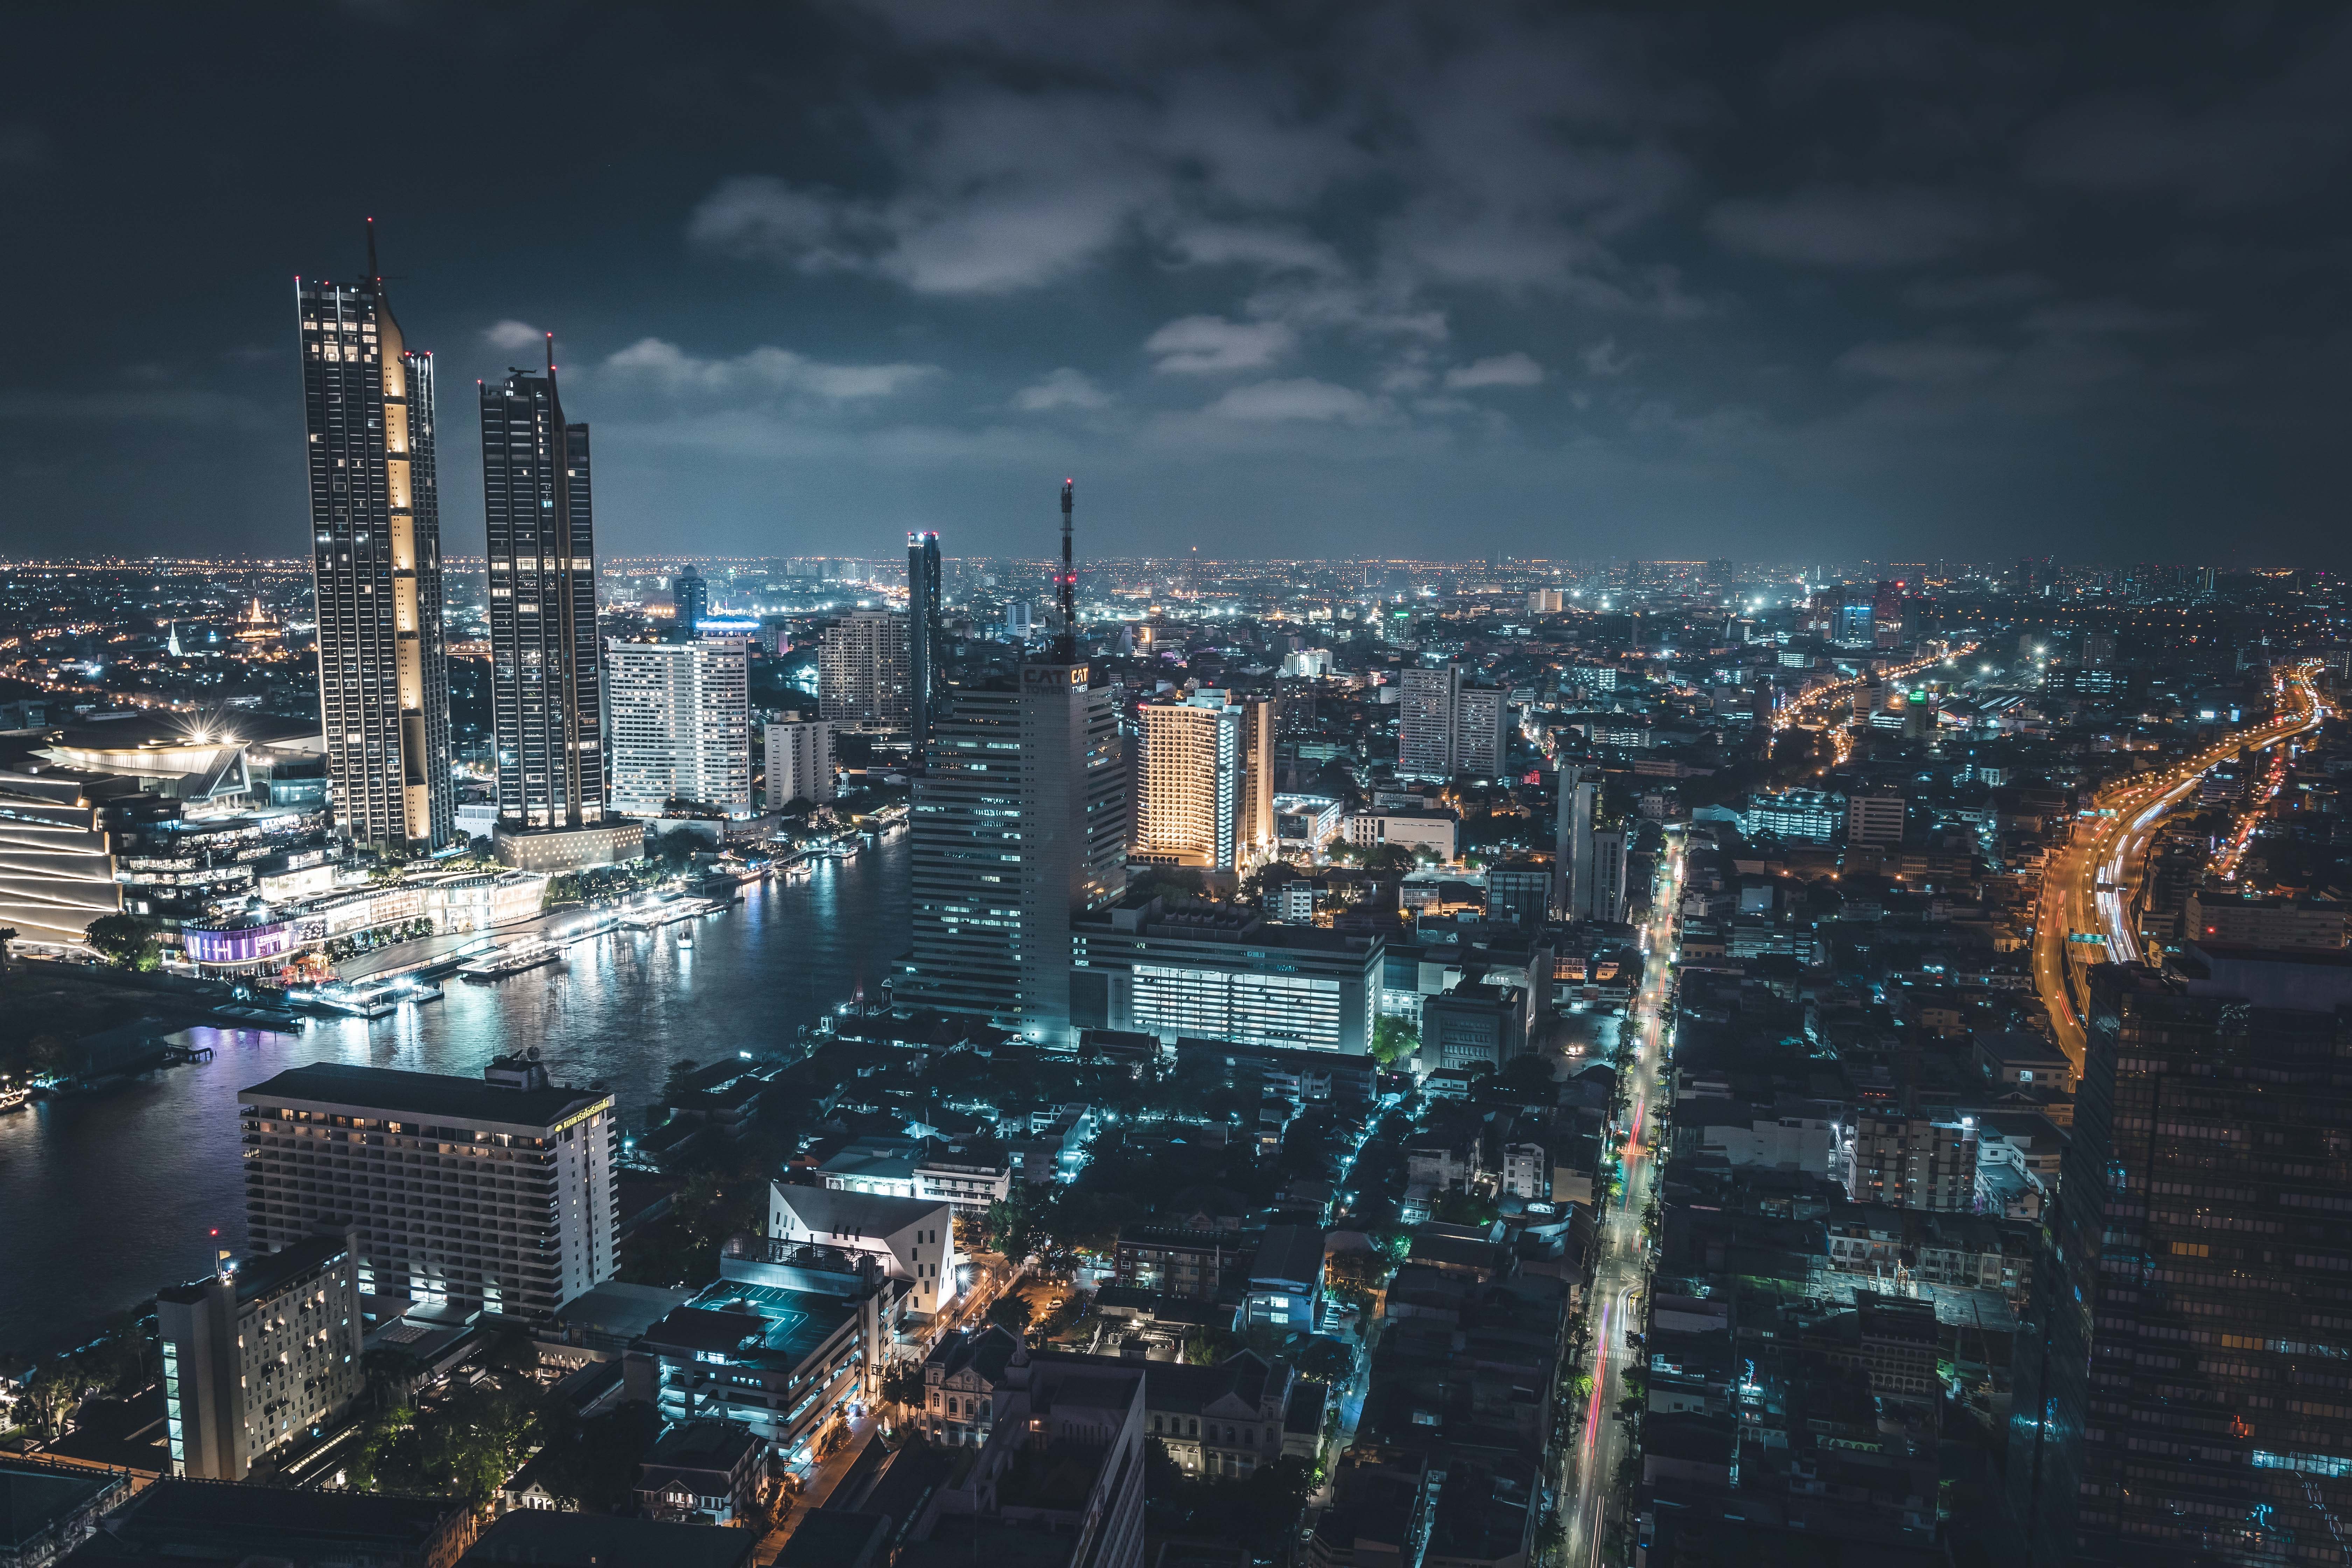 Popular Bangkok Image for Phone